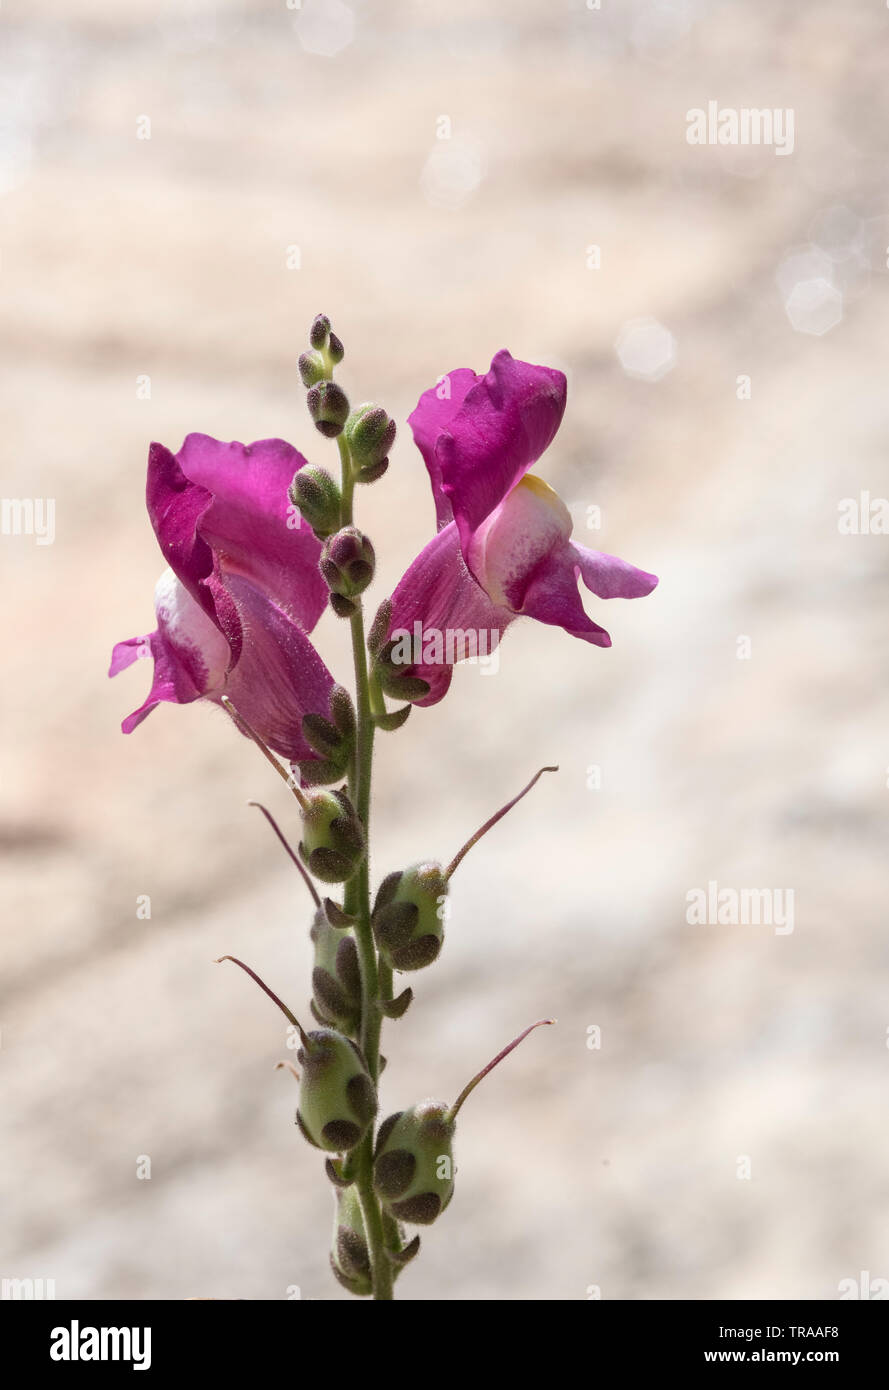 Flowers of Common Snapdragon (Antirrhinum majus) Stock Photo